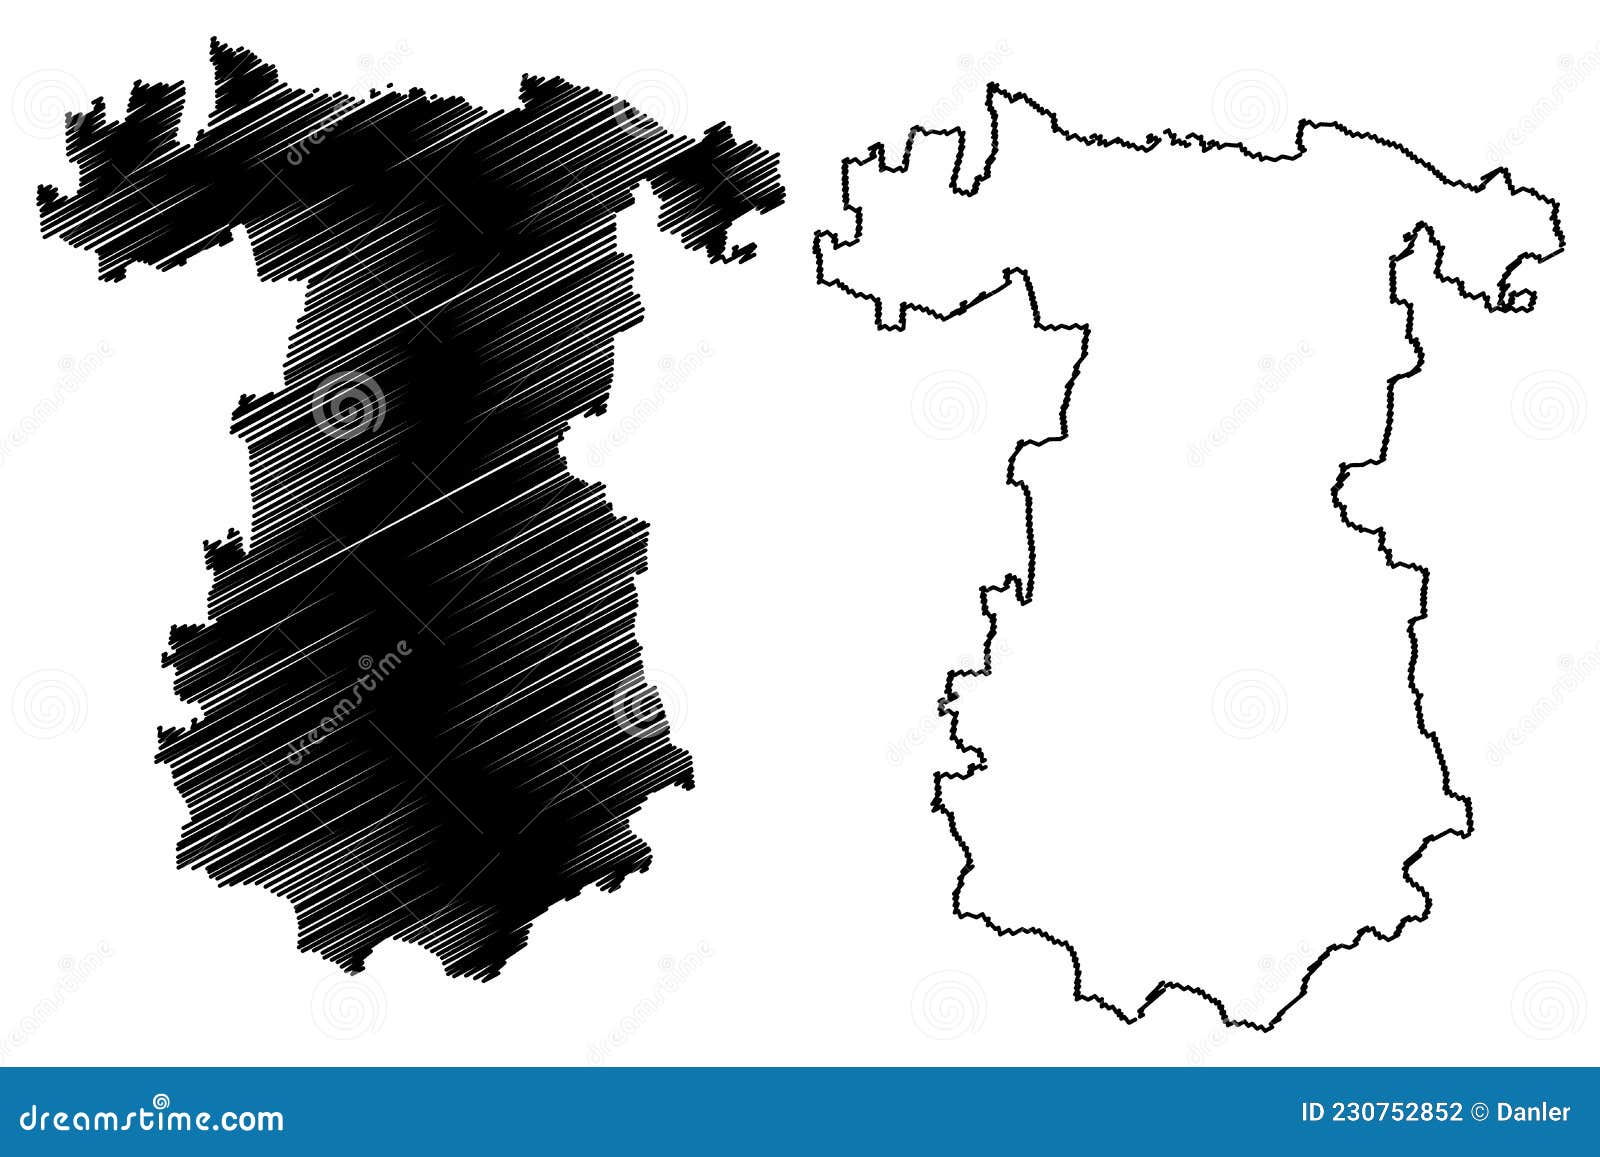 Karnataka map drawing in small  Brainlyin